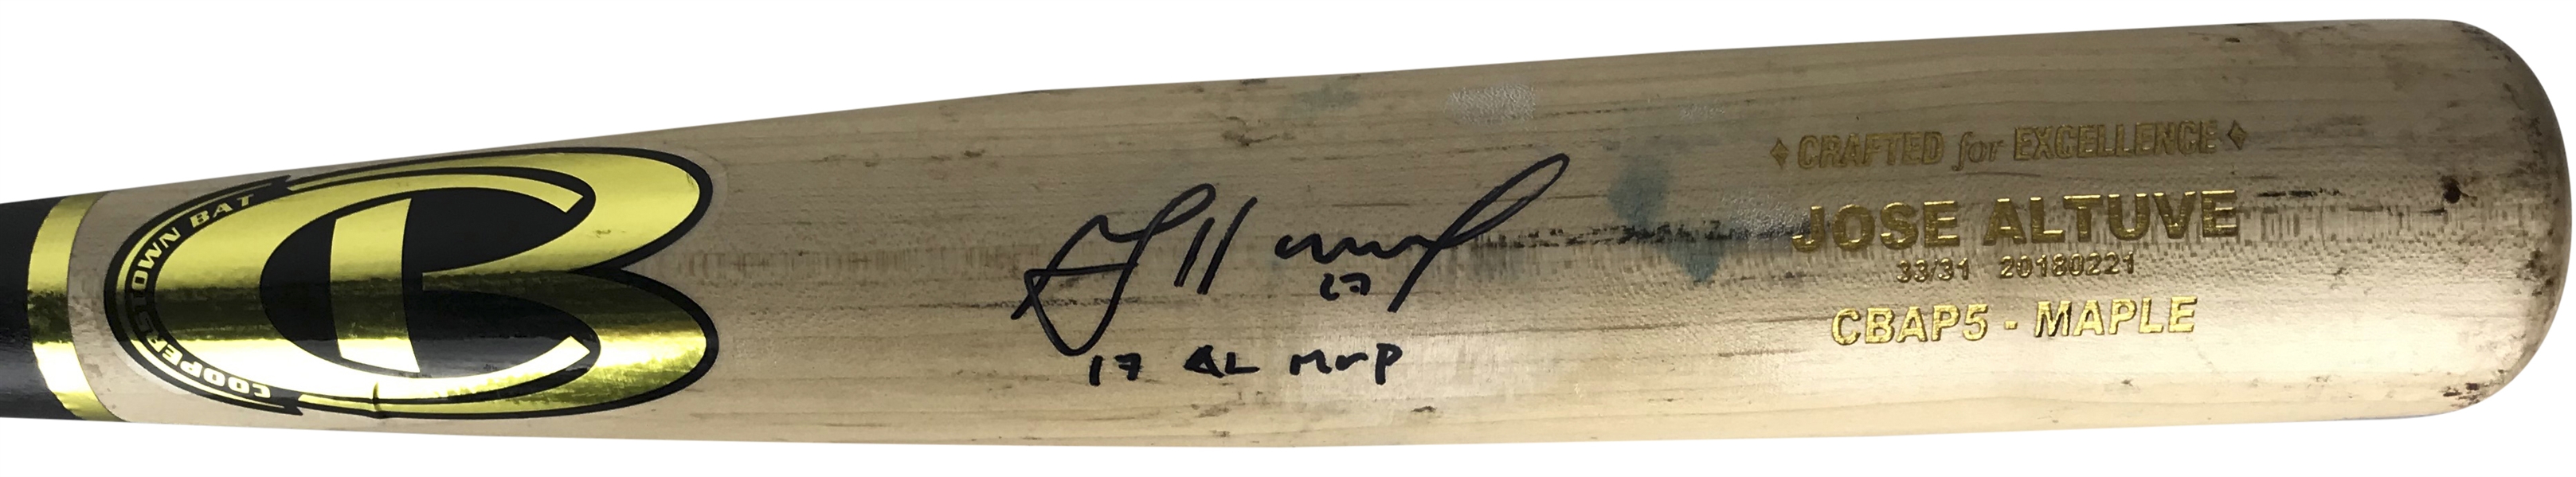 Jose Altuve Game Used 2018 Coopertown CBAP5-Maple Baseball Bat (Mears & PSA/DNA Guaranteed)